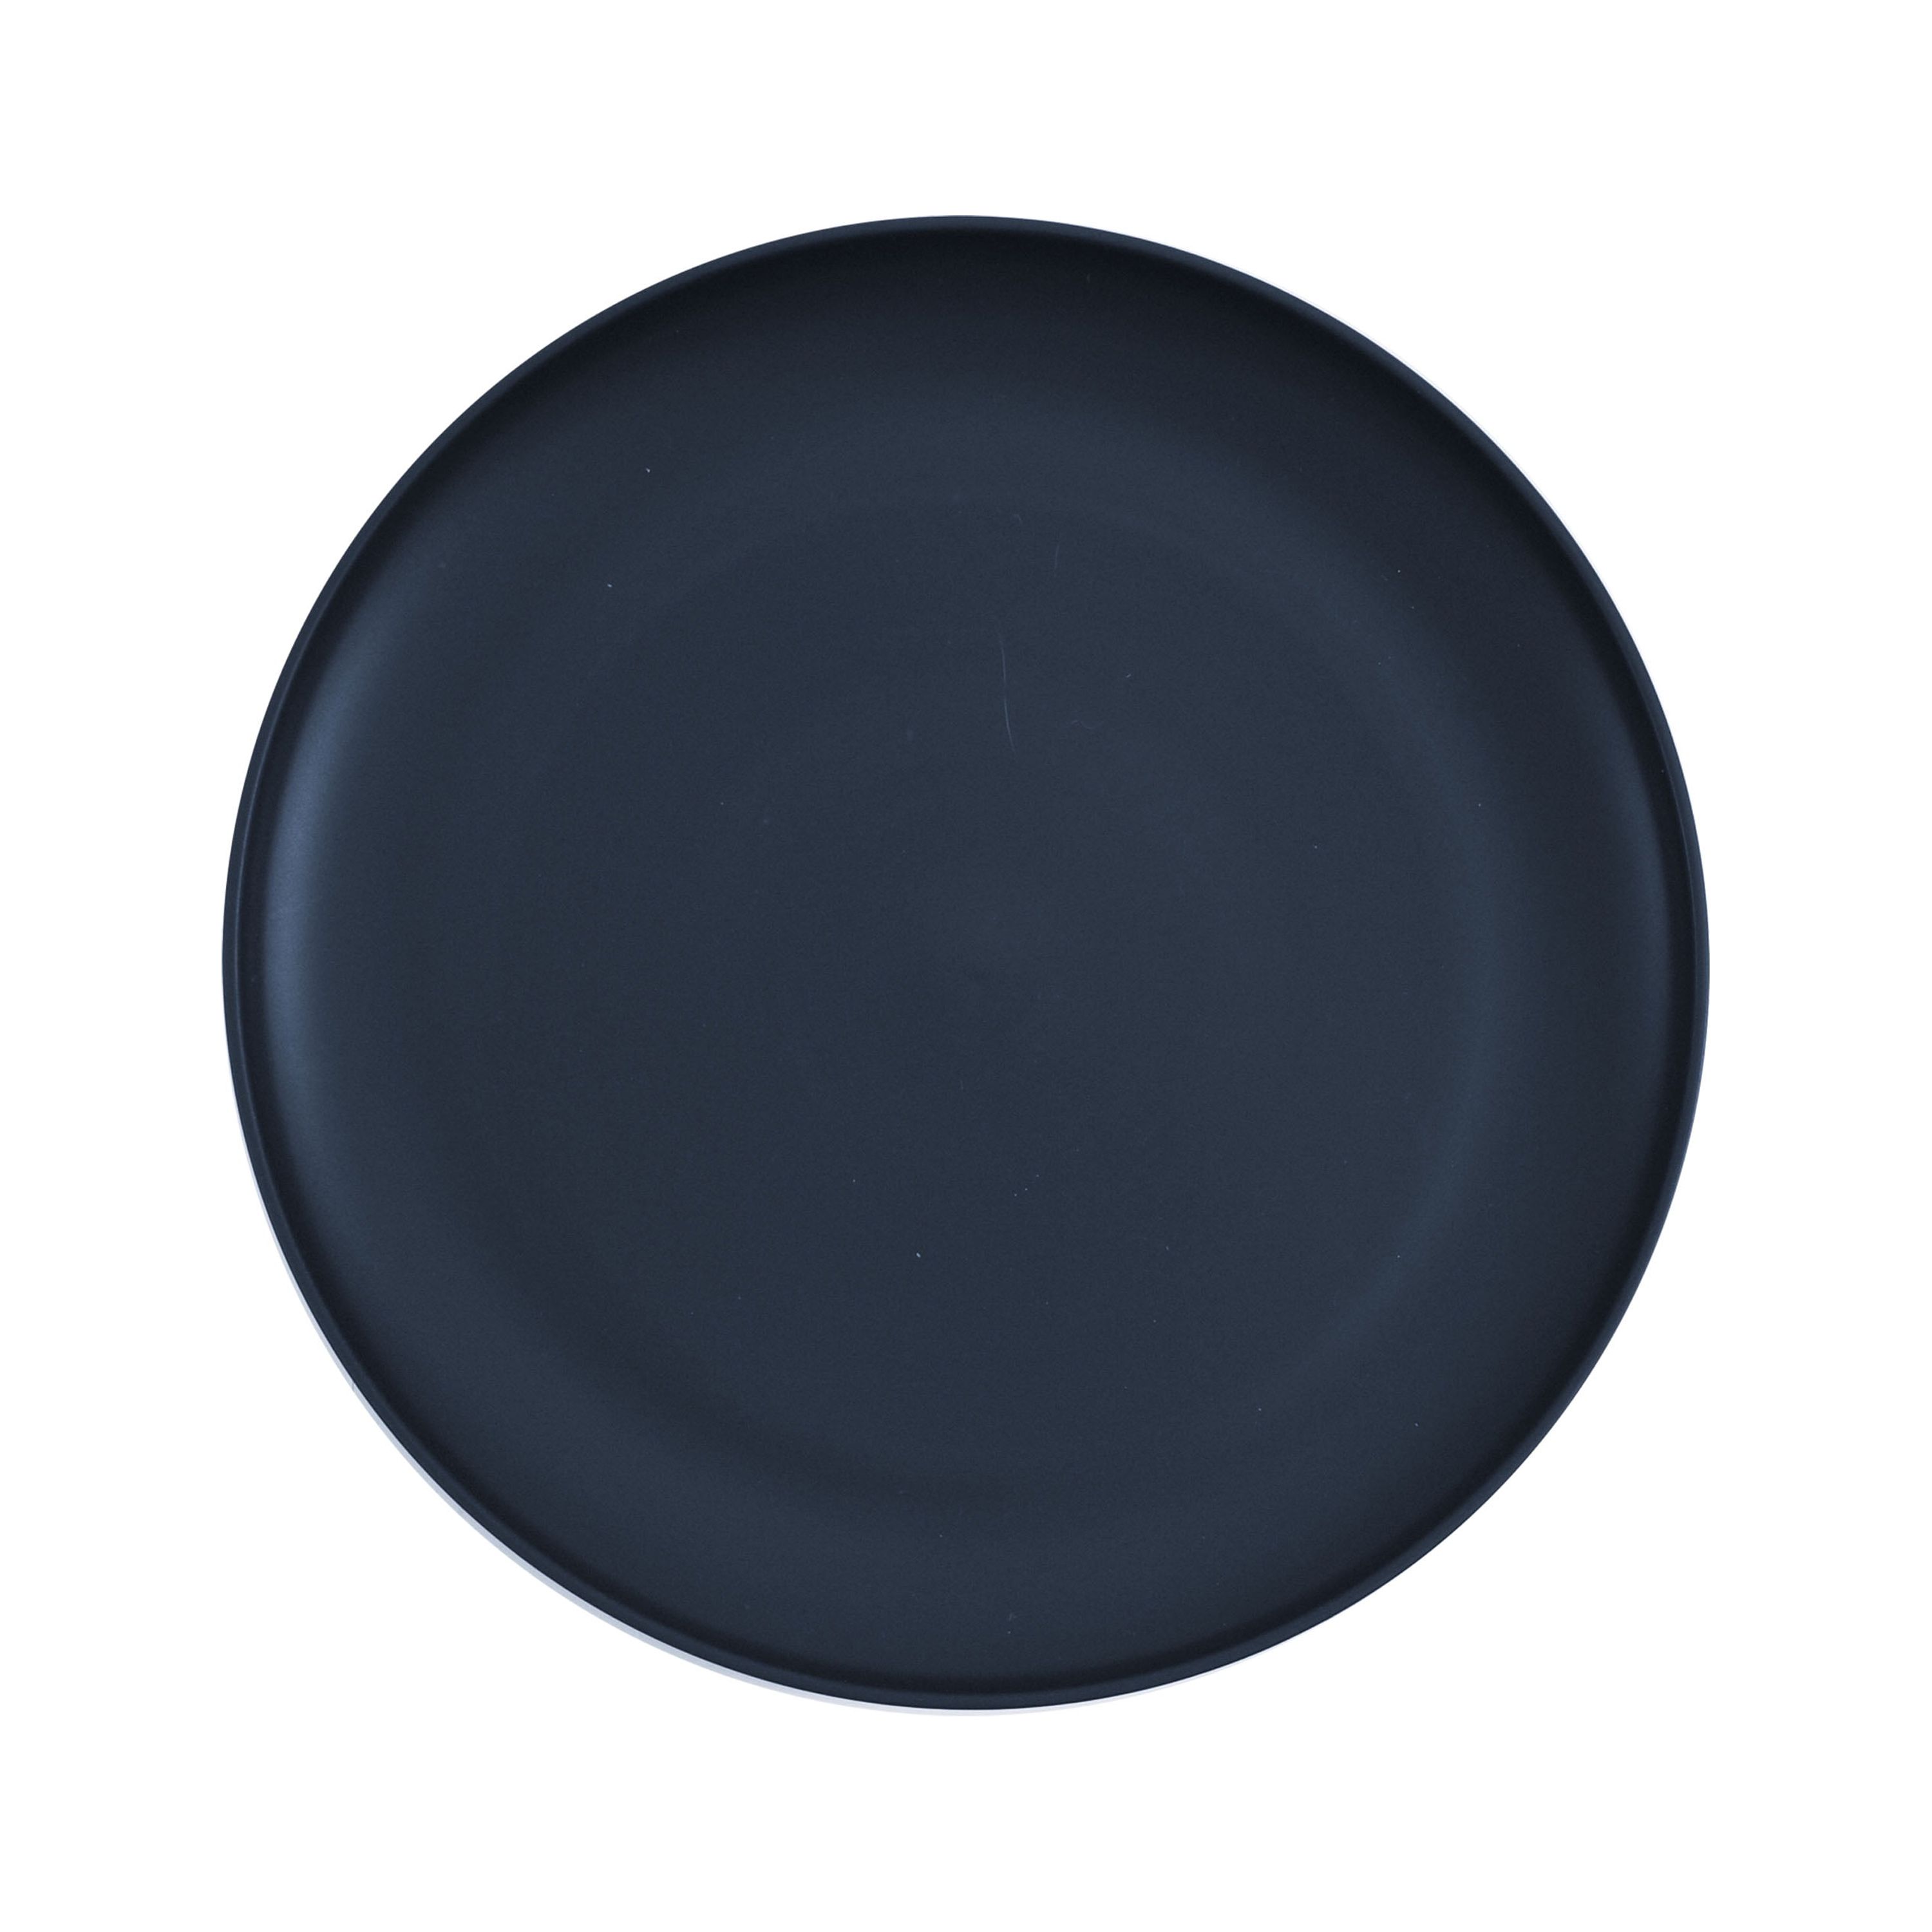 Mainstays - Dark Blue Round Plastic Plate, 10.5 inch - image 3 of 4